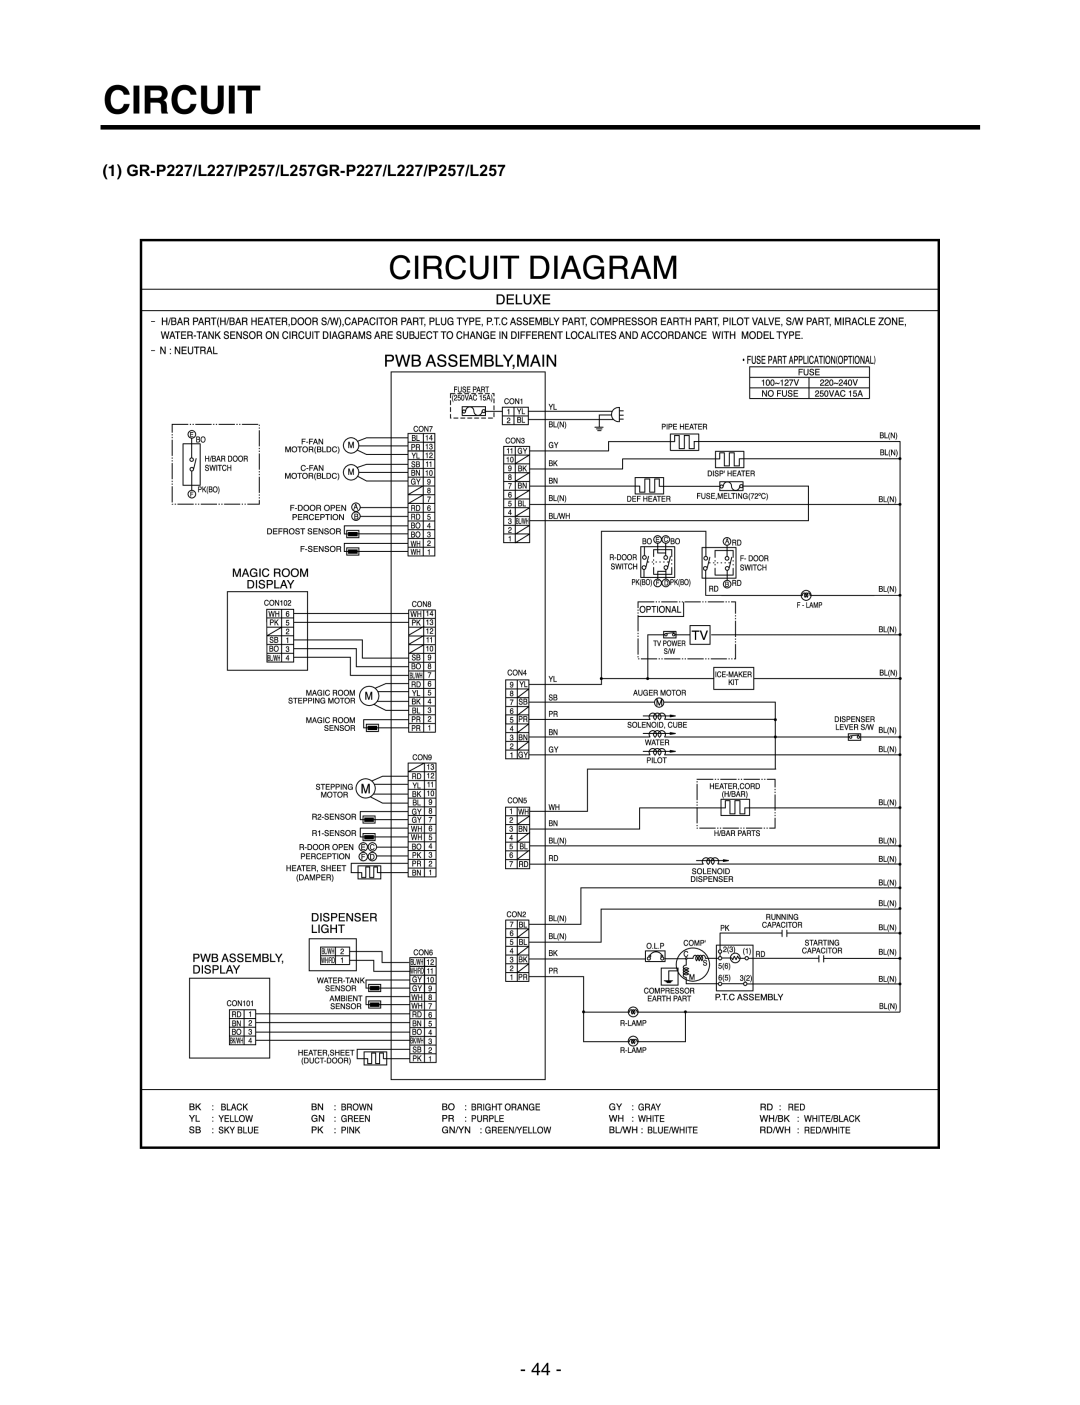 LG Electronics GR-P257/L257 service manual Circuit, GR-P227/L227/P257/L257GR-P227/L227/P257/L257 